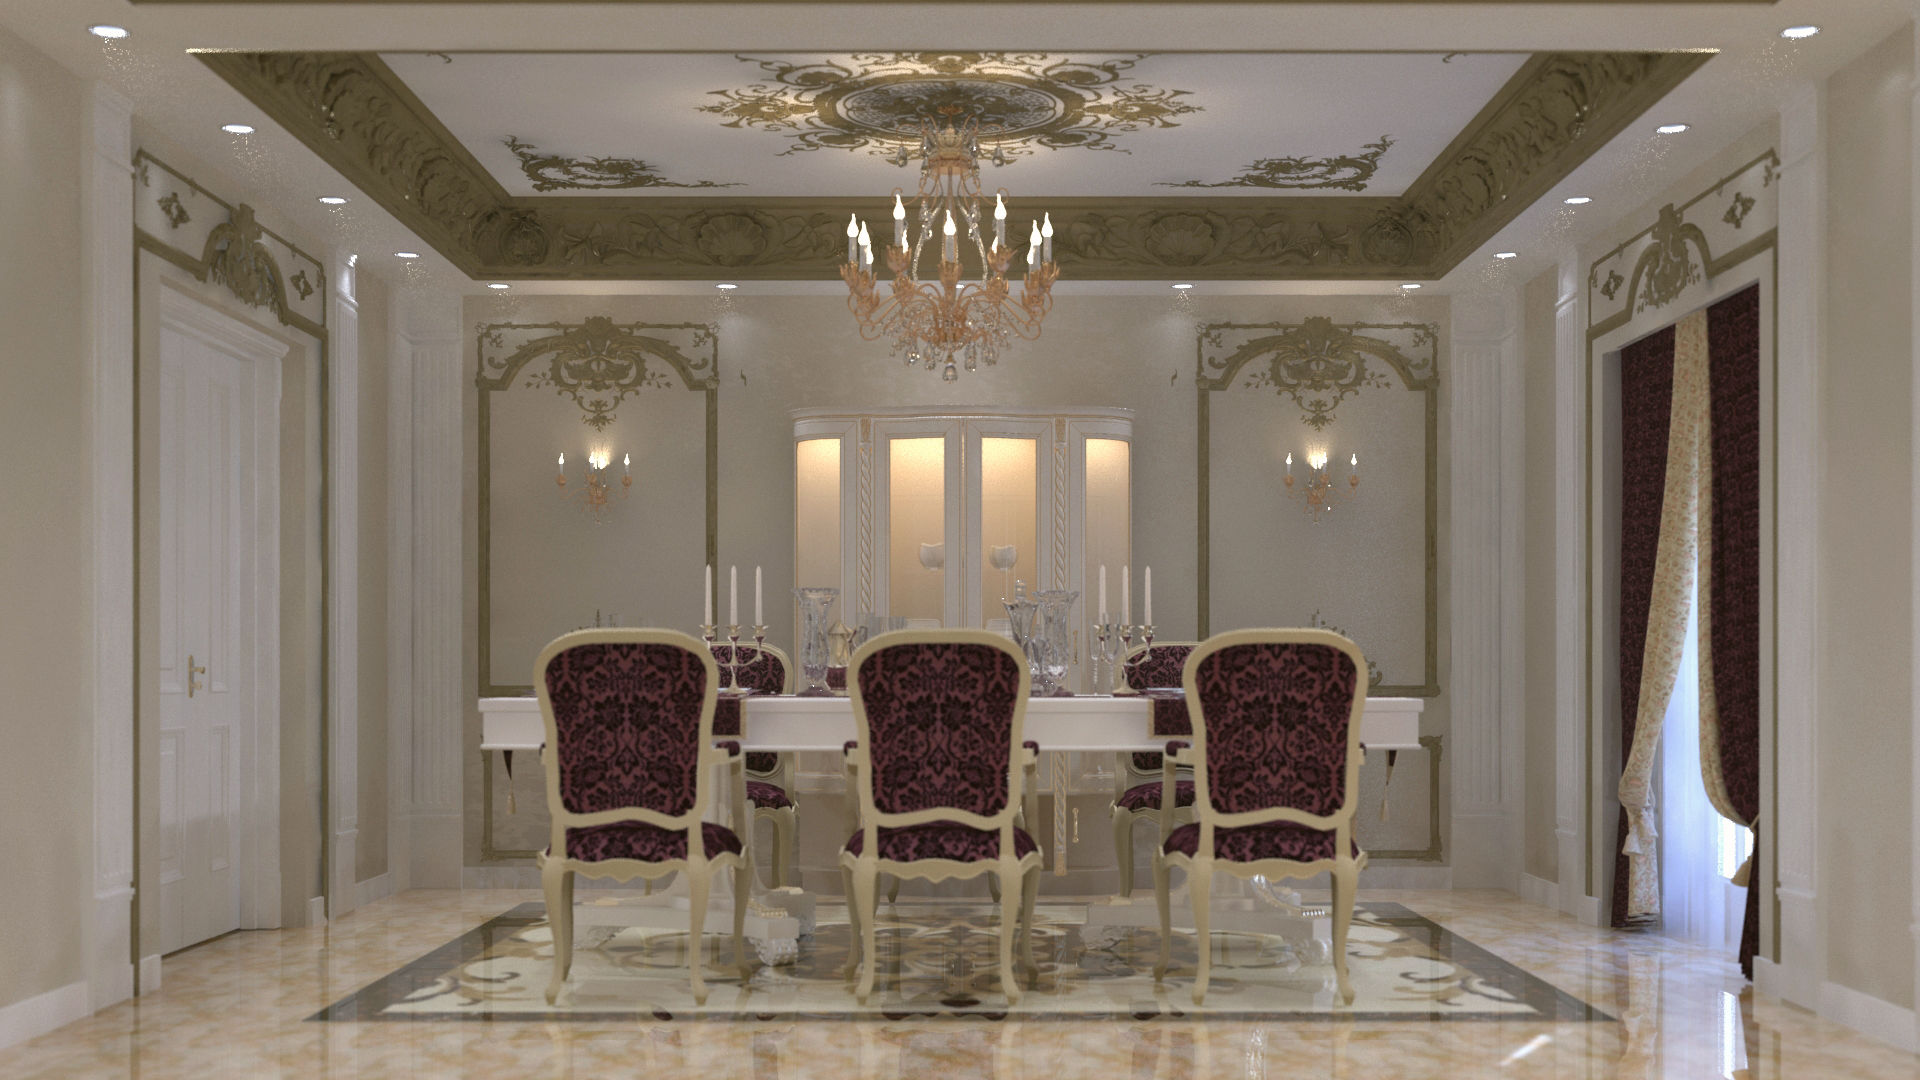 شقه فى الشيخ زايد, lifestyle_interiordesign lifestyle_interiordesign Classic style dining room